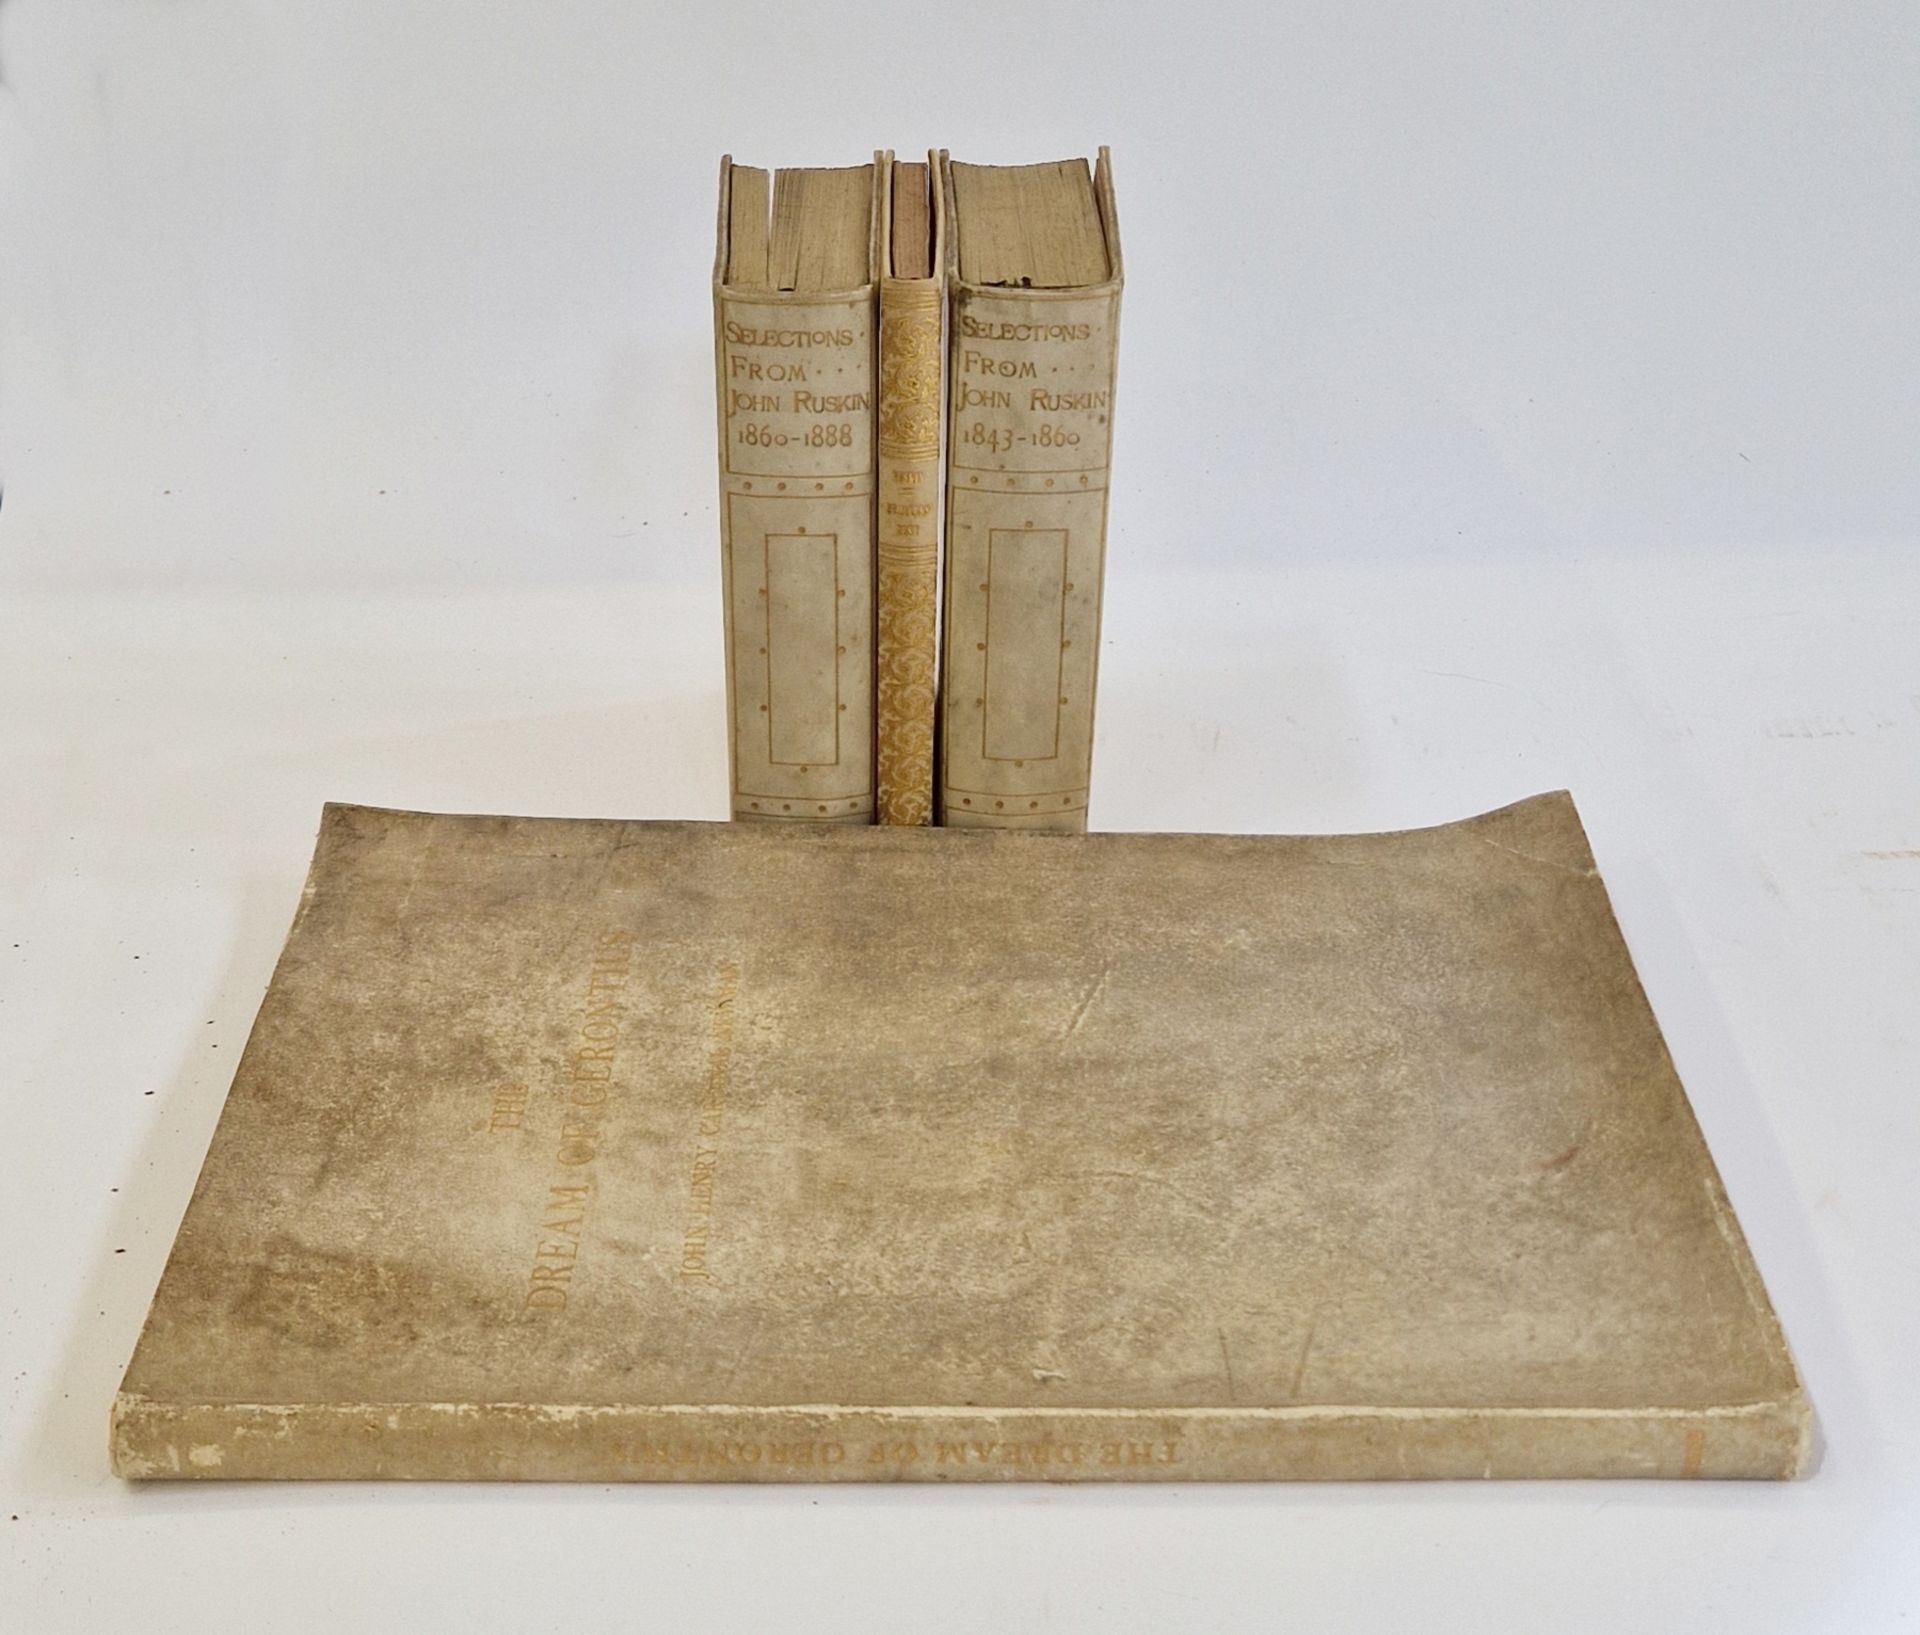 Bindings - Ruskin, John "Selections form the Writings of John Ruskin, First Series 1843-1860" Second